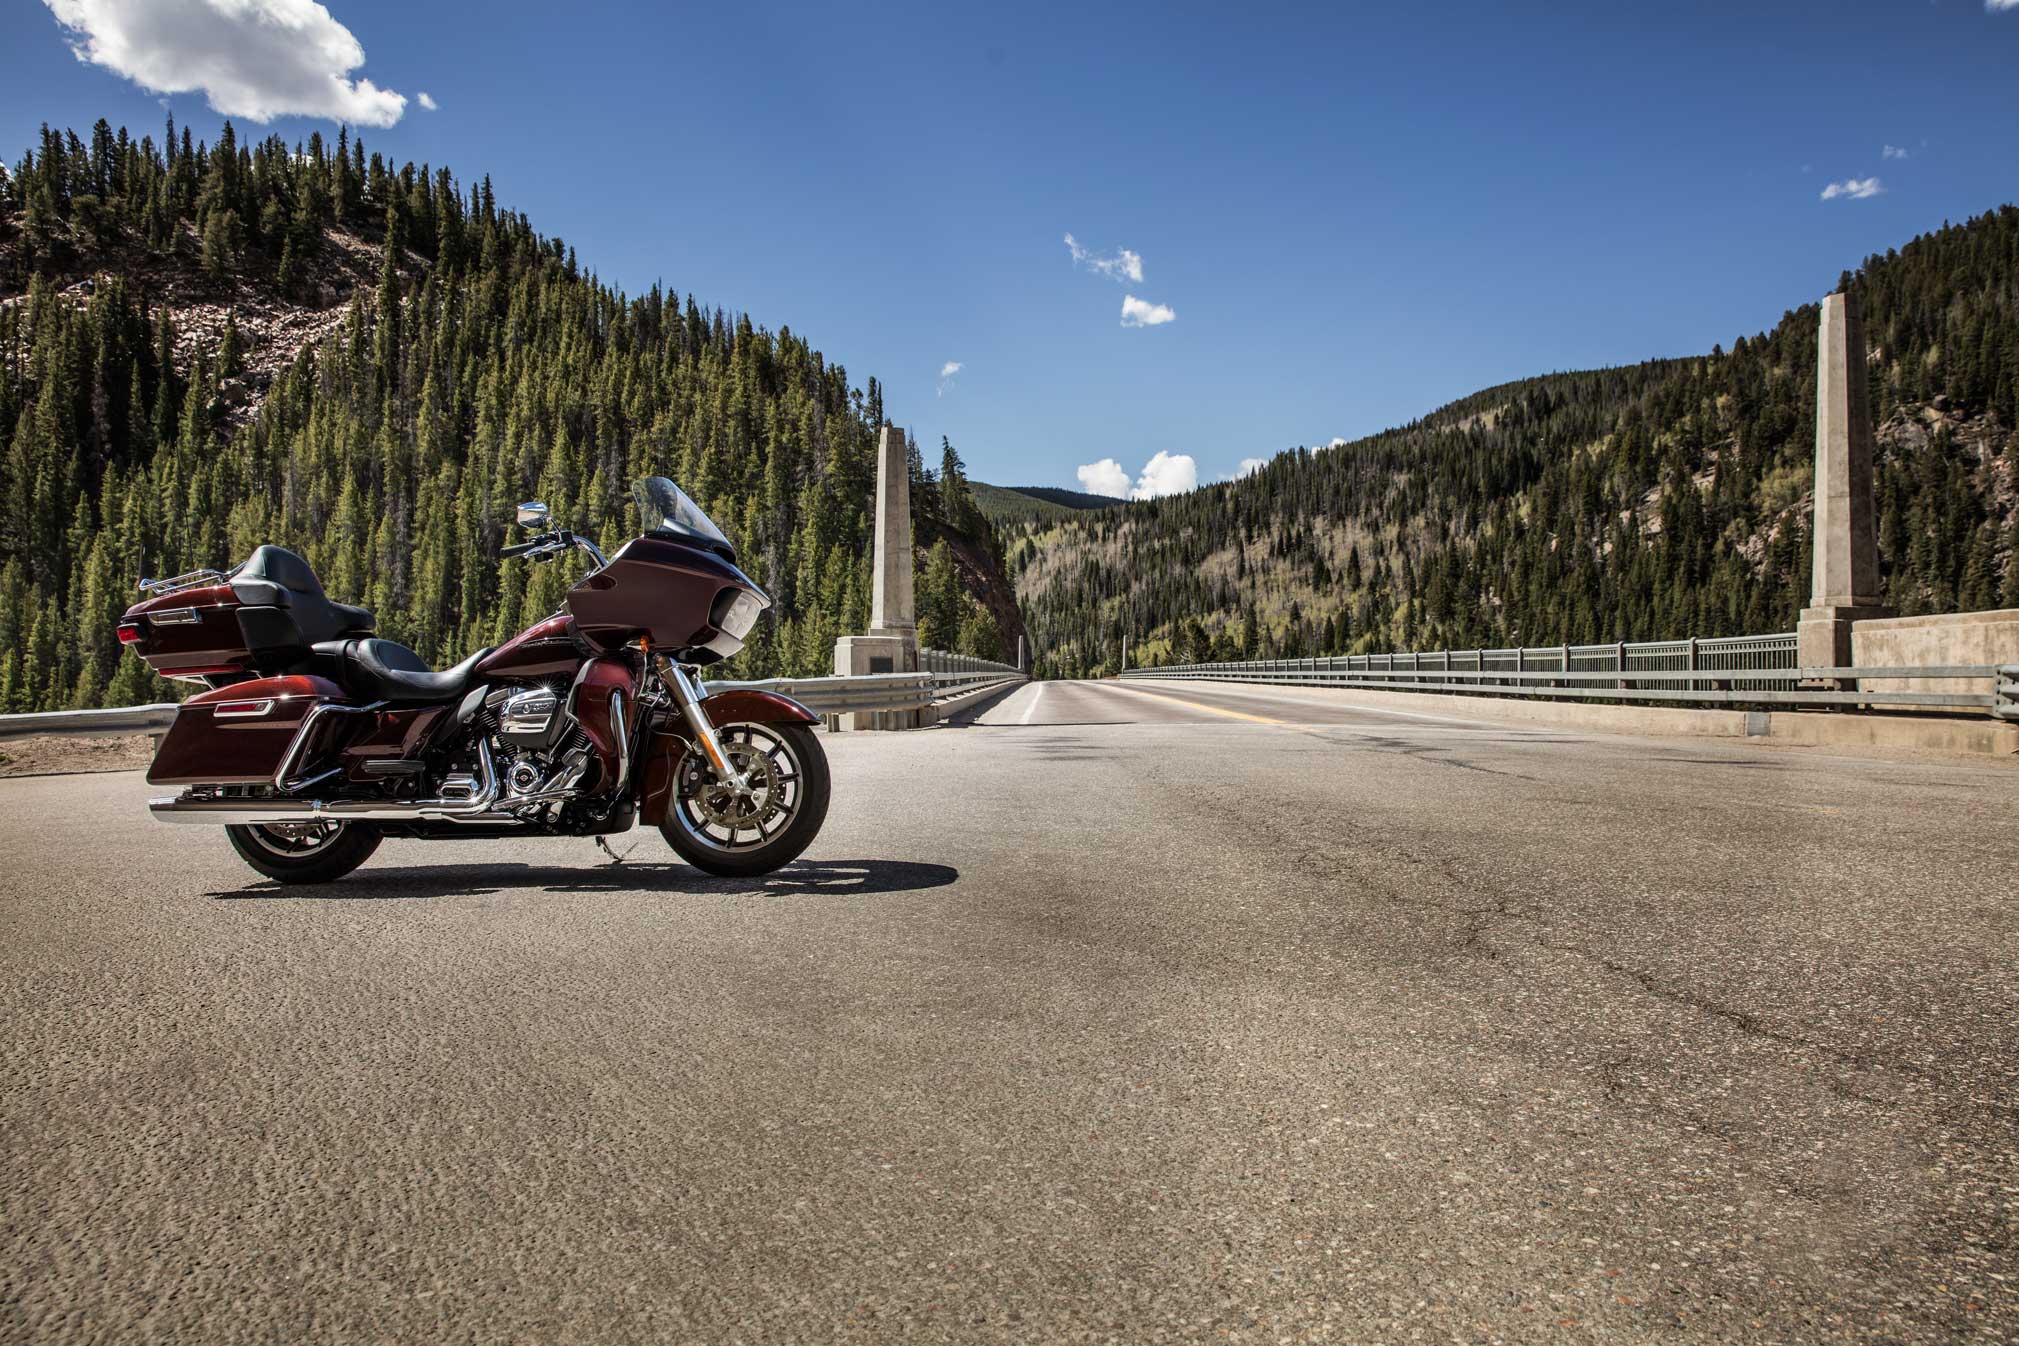  2019 Harley Davidson Road Glide Ultra Guide Total Motorcycle